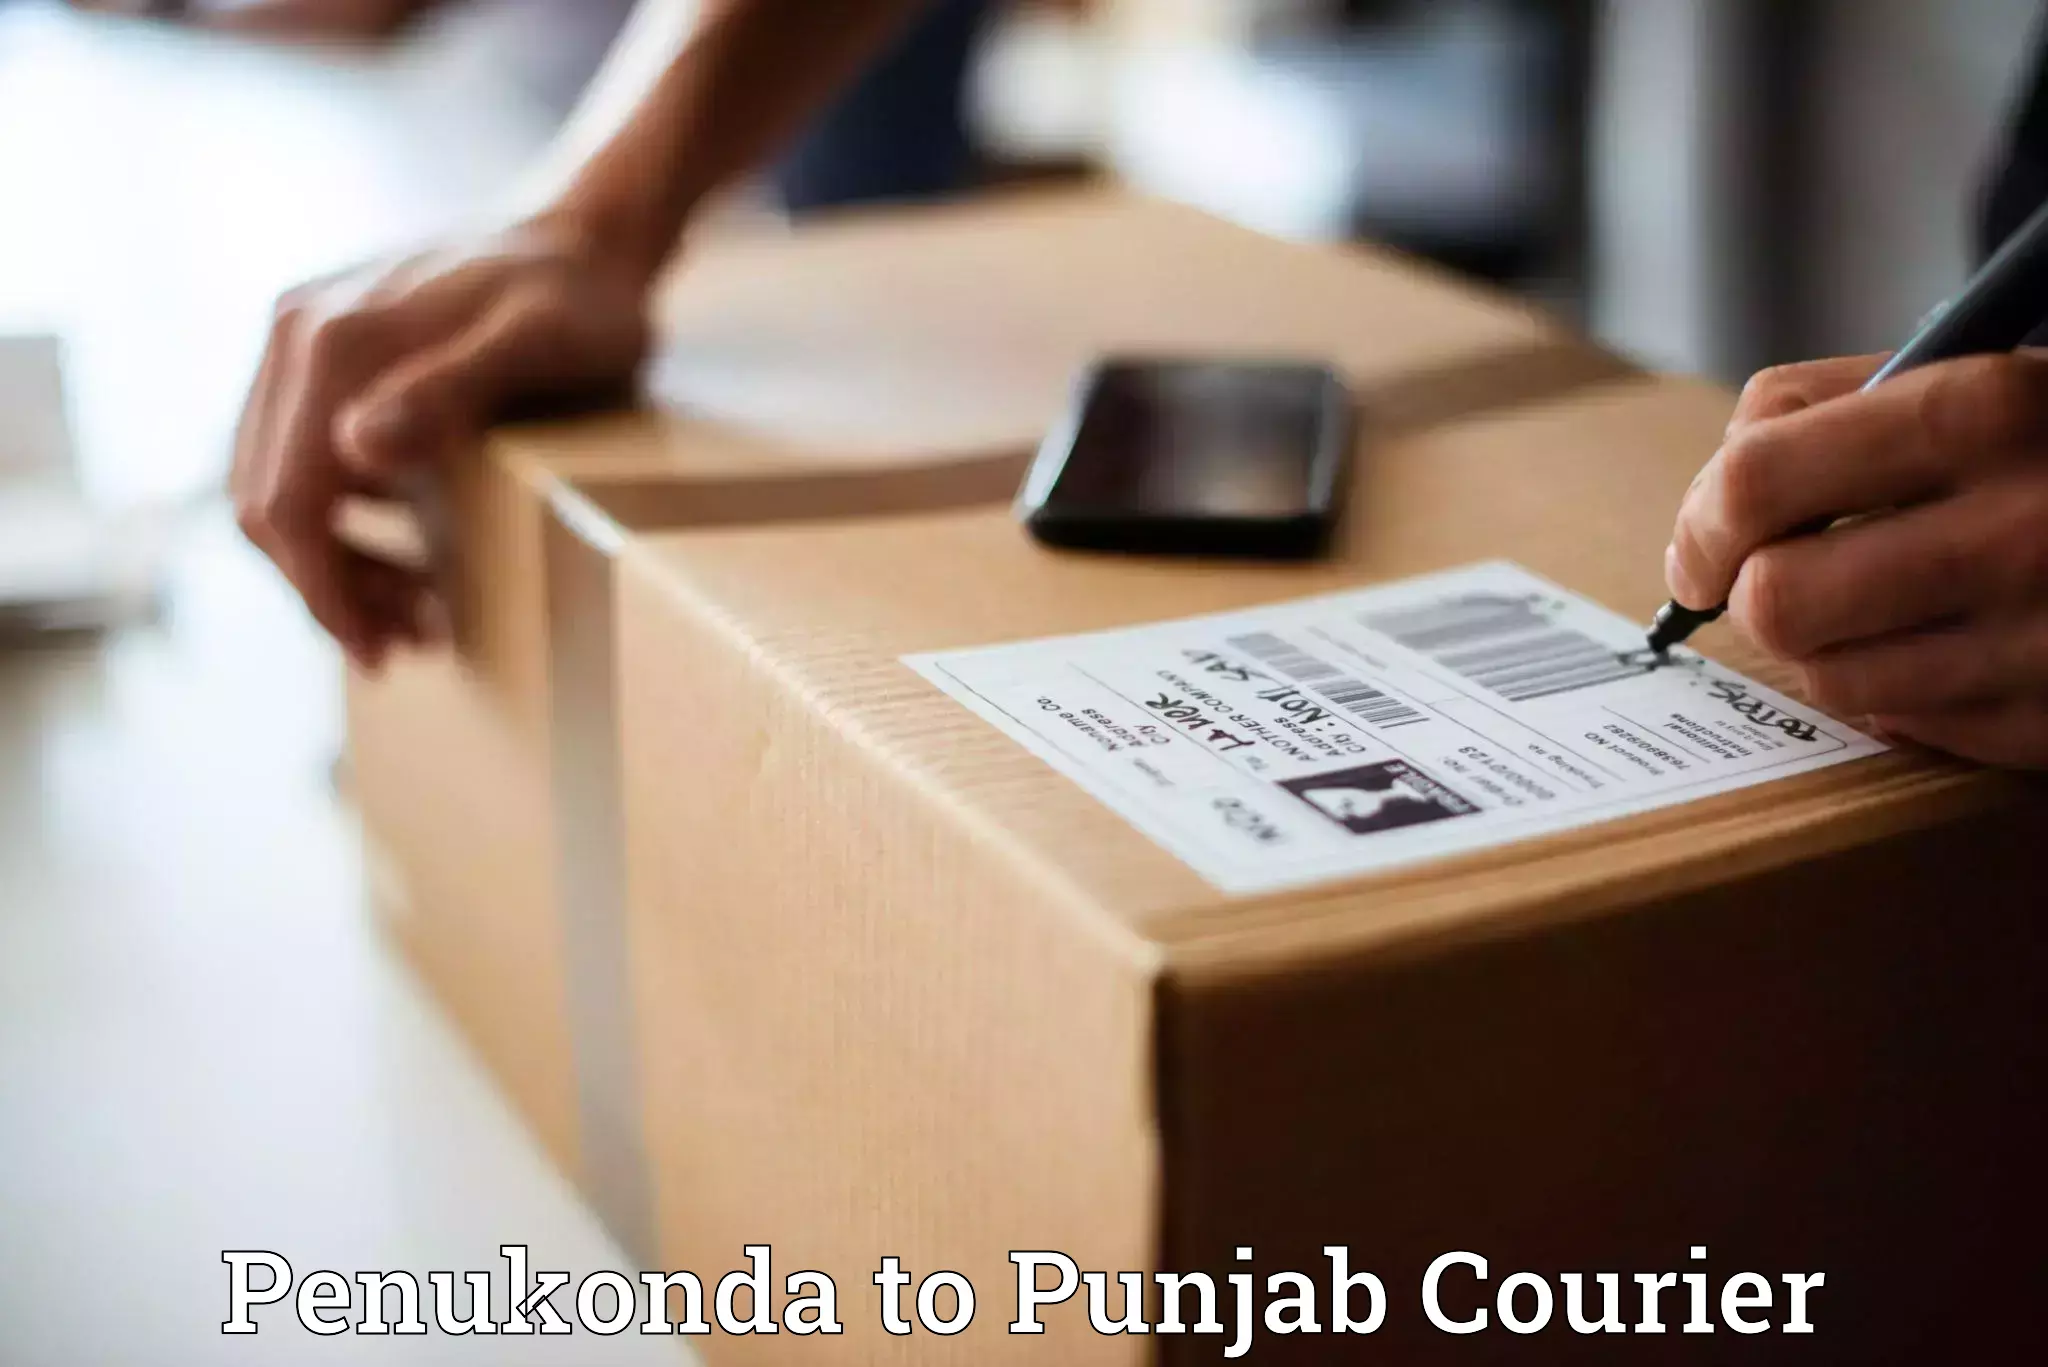 Express delivery network Penukonda to Punjab